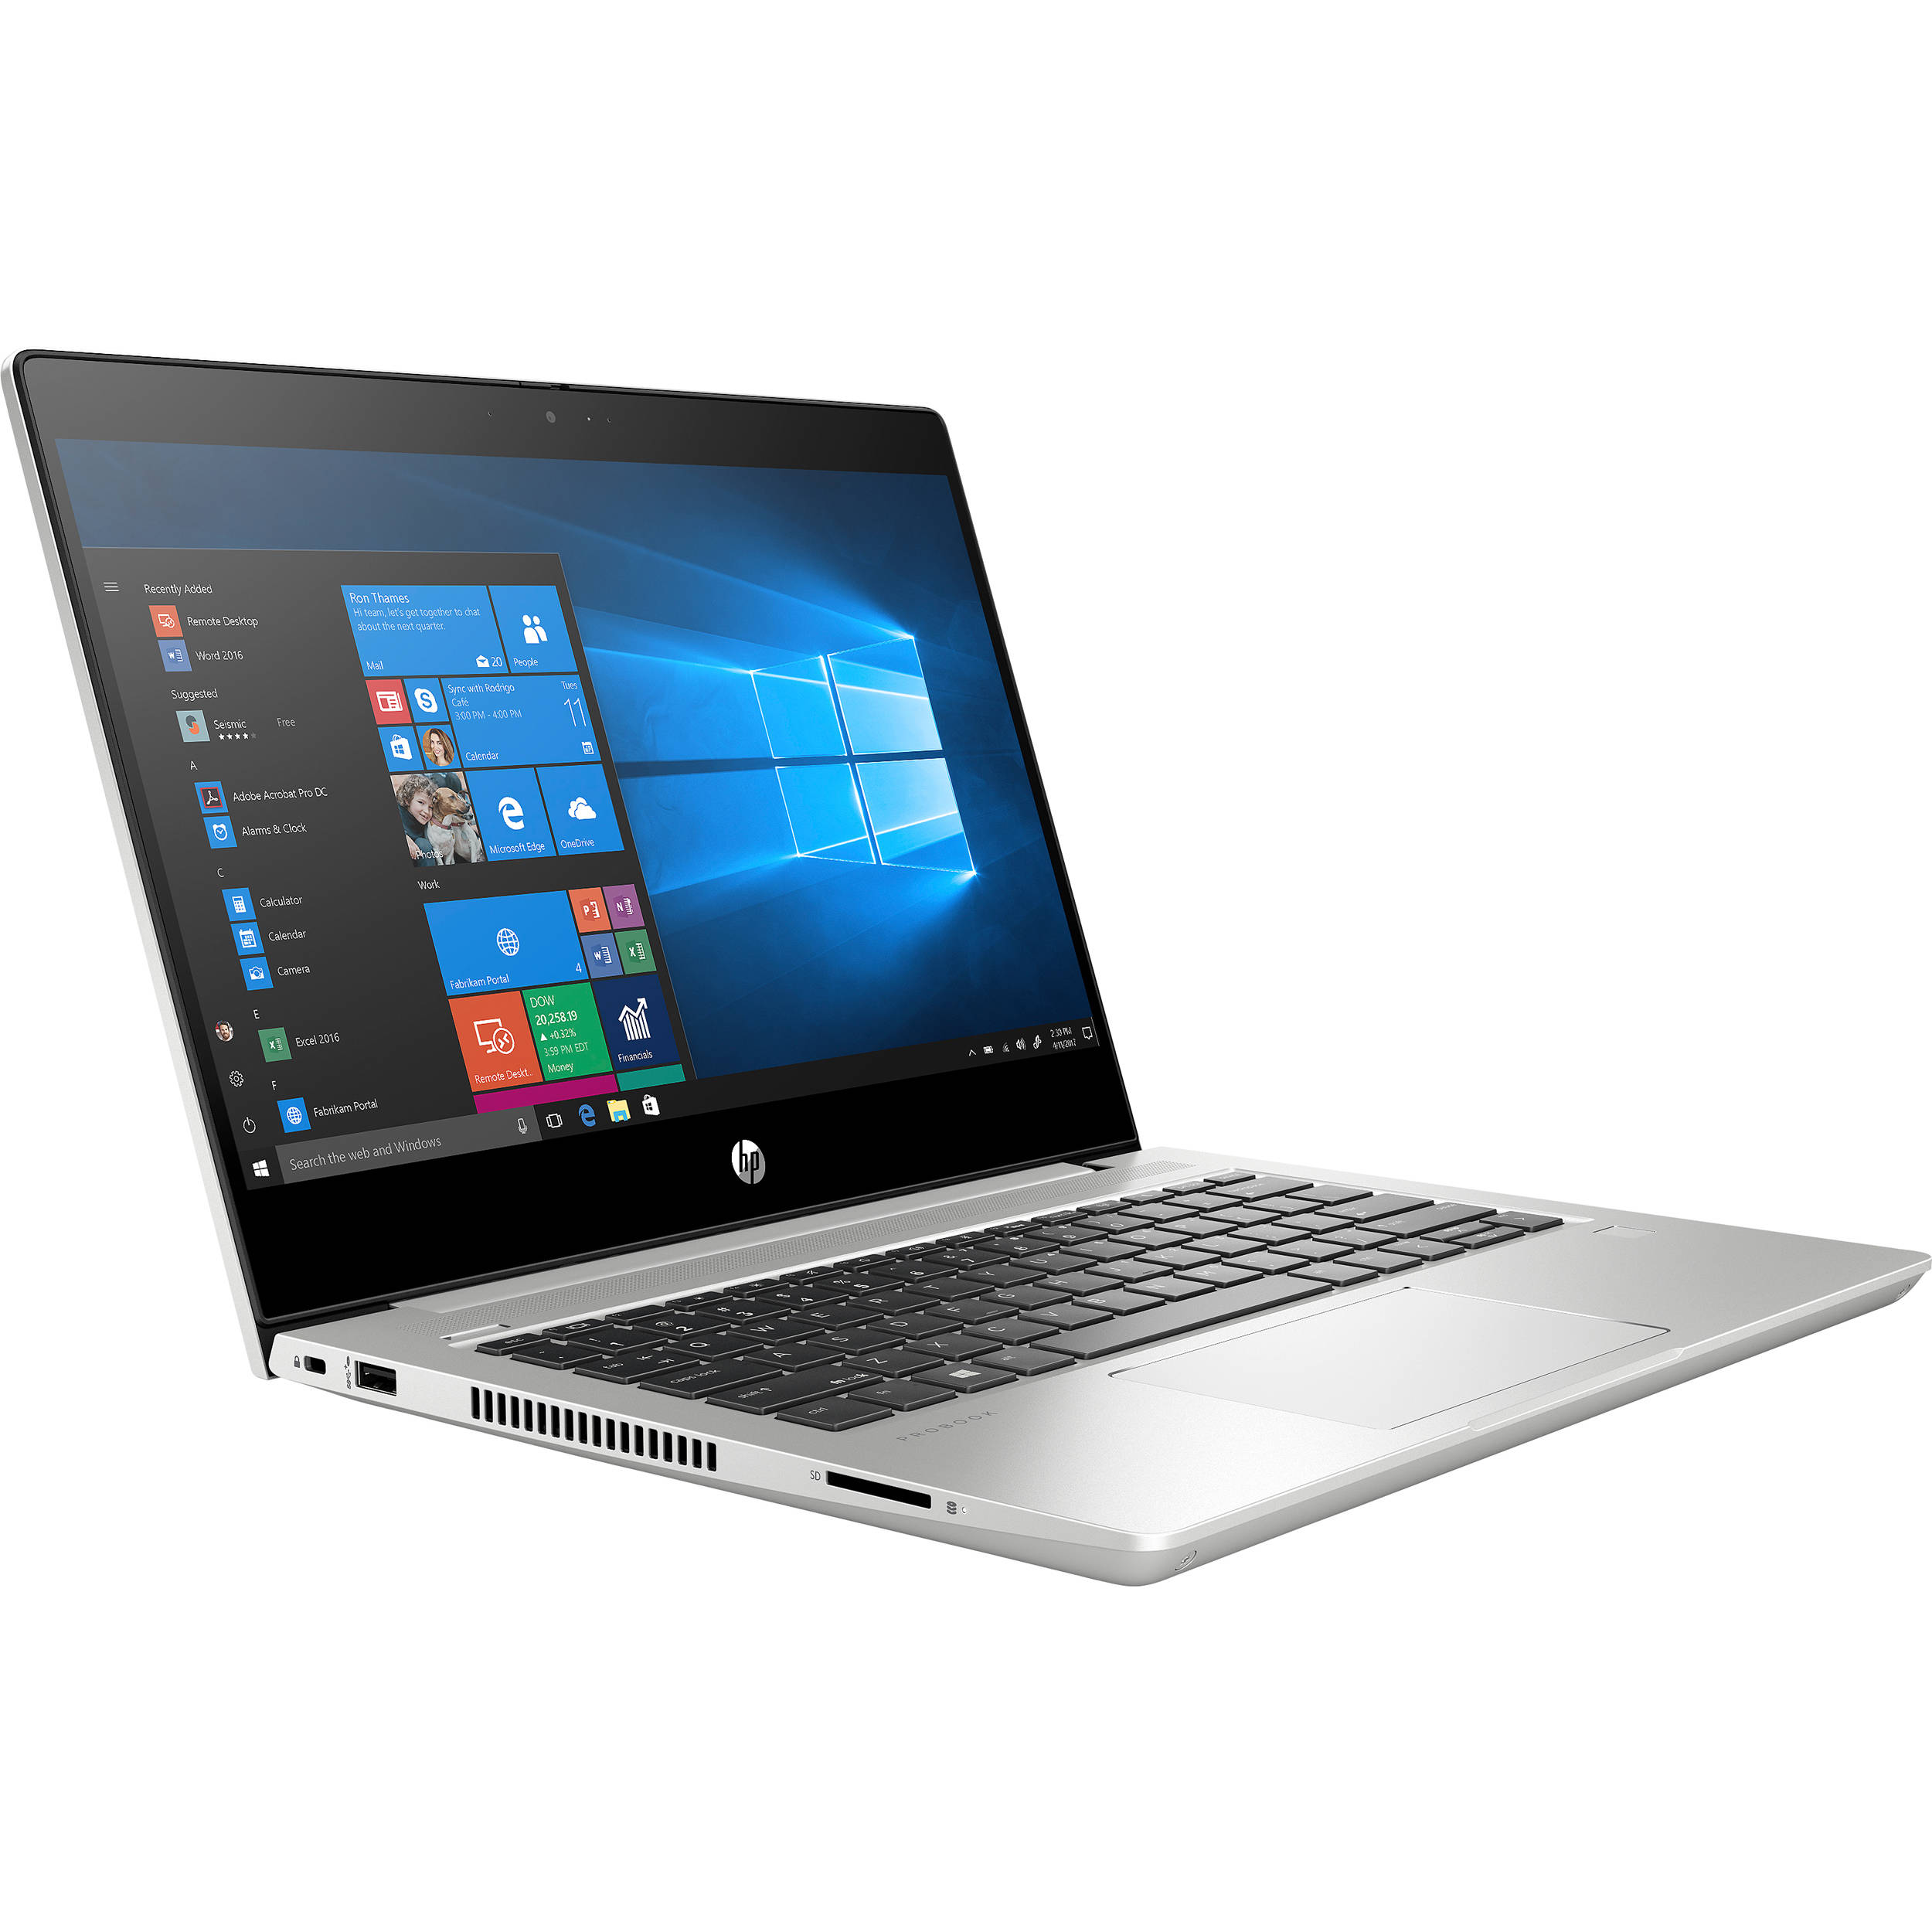 HP ProBook 430 G7, Core i5-10210U 1.6/4.2Ghz, 8GB, 256GB SSD, 13.3" FHD, Win 10 Pro 64, 3 Year Warranty - Click Image to Close